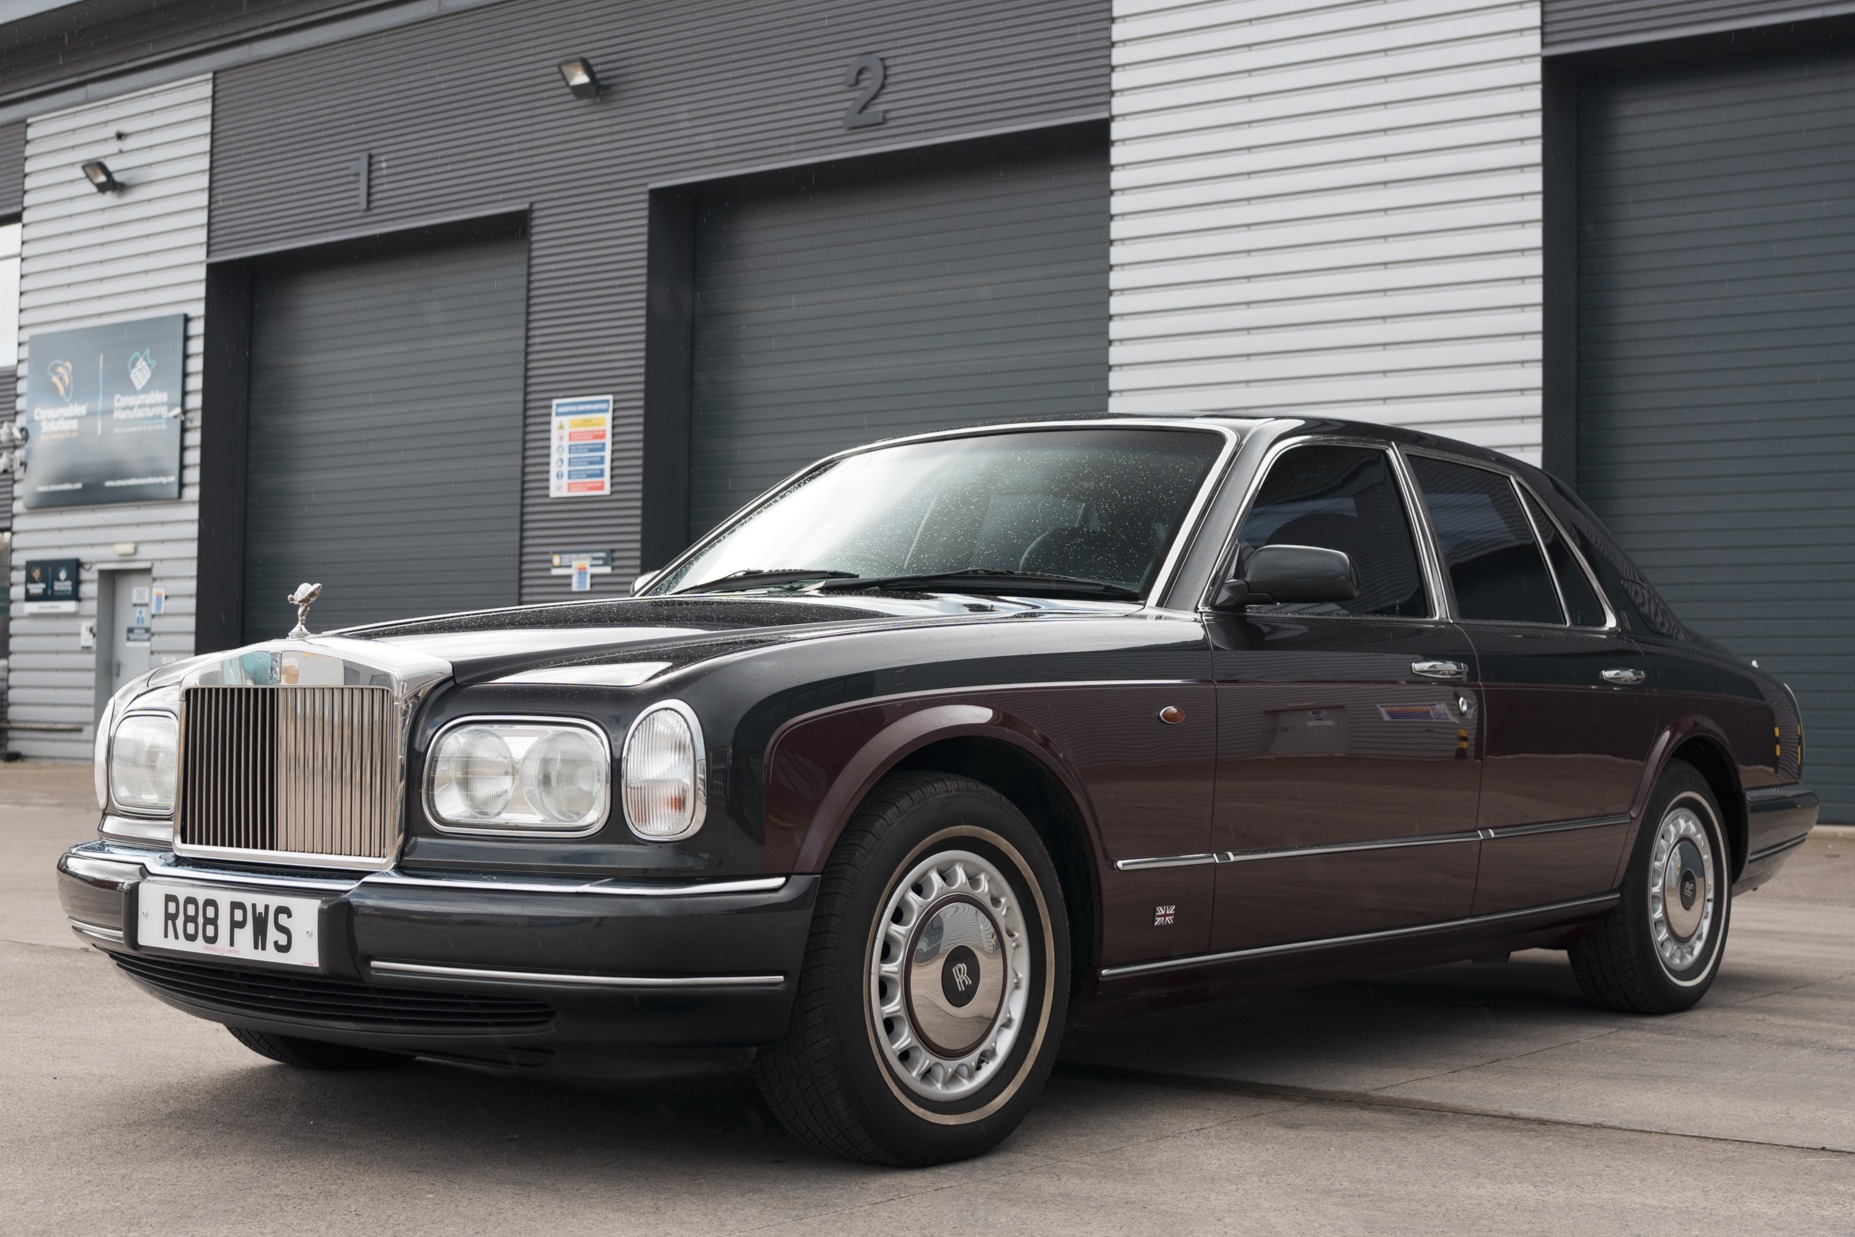 1998 Rolls Royce Silver Seraph Evoke Classics online classics car auctions